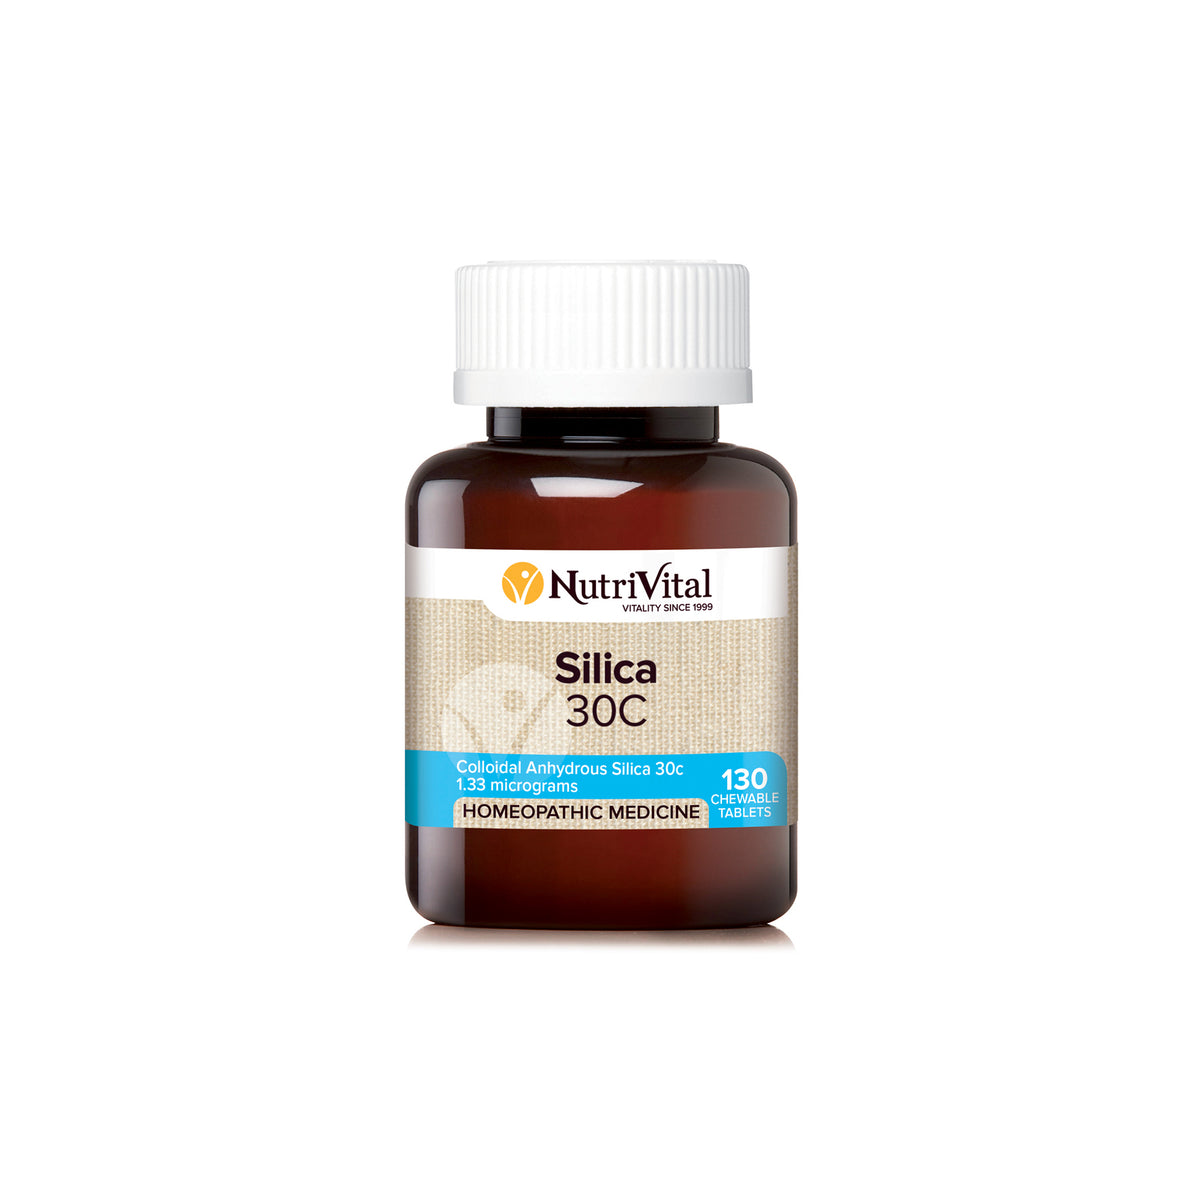 NutriVital Homeopathic Silica 30C